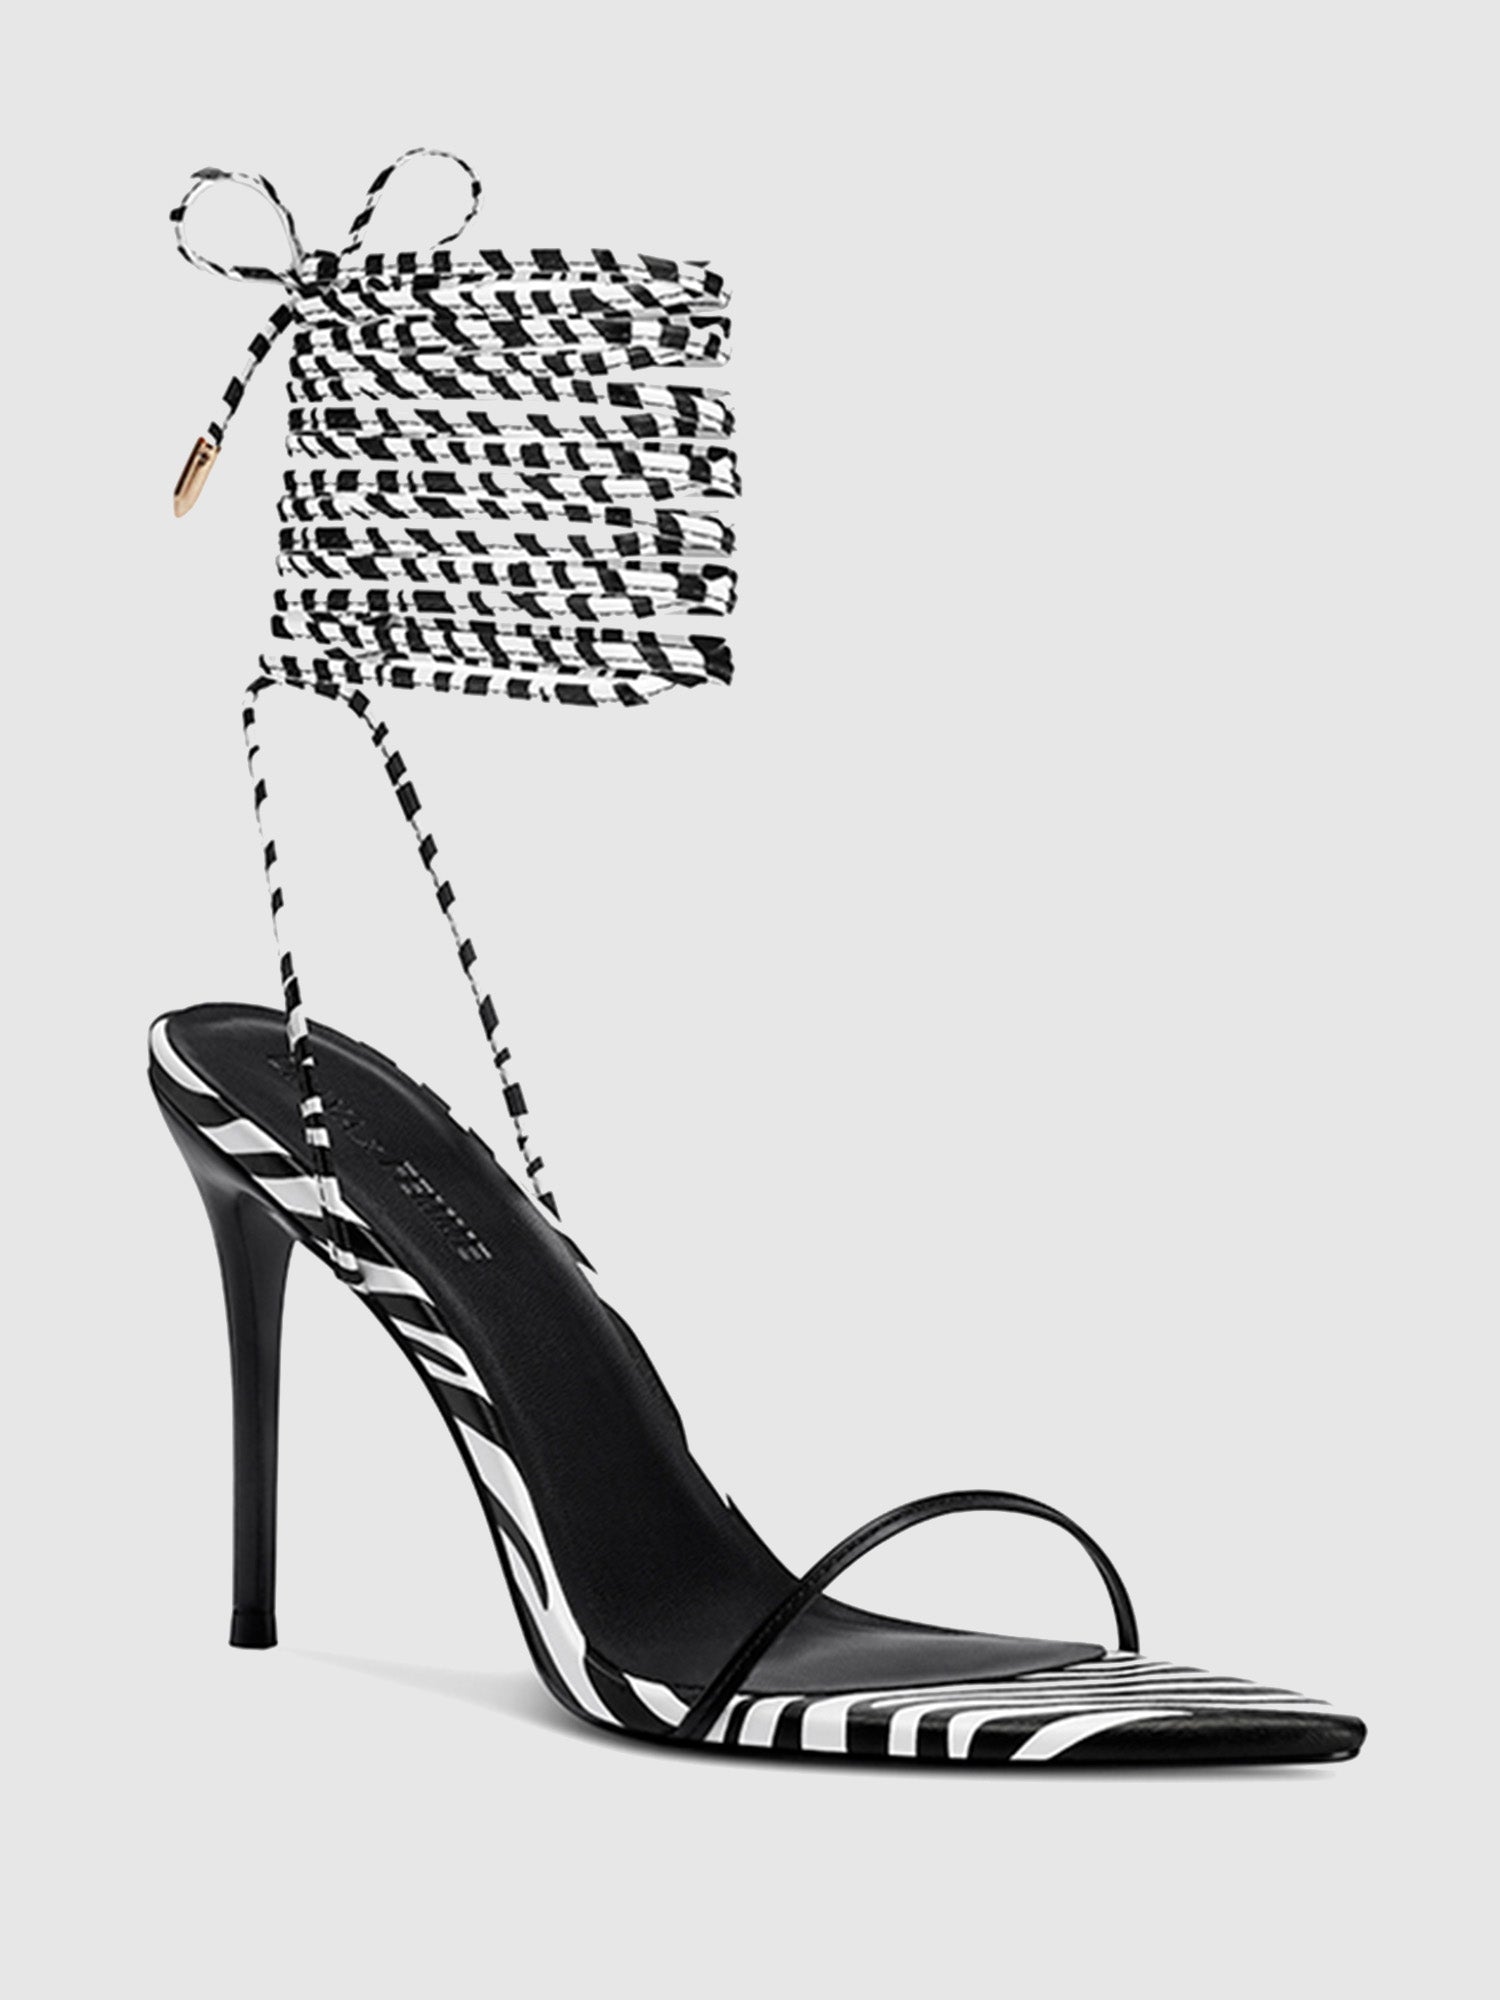 Open Toe Thigh High Lace Up Stiletto High heel Metallic Gladiator Sandals  Boots | eBay